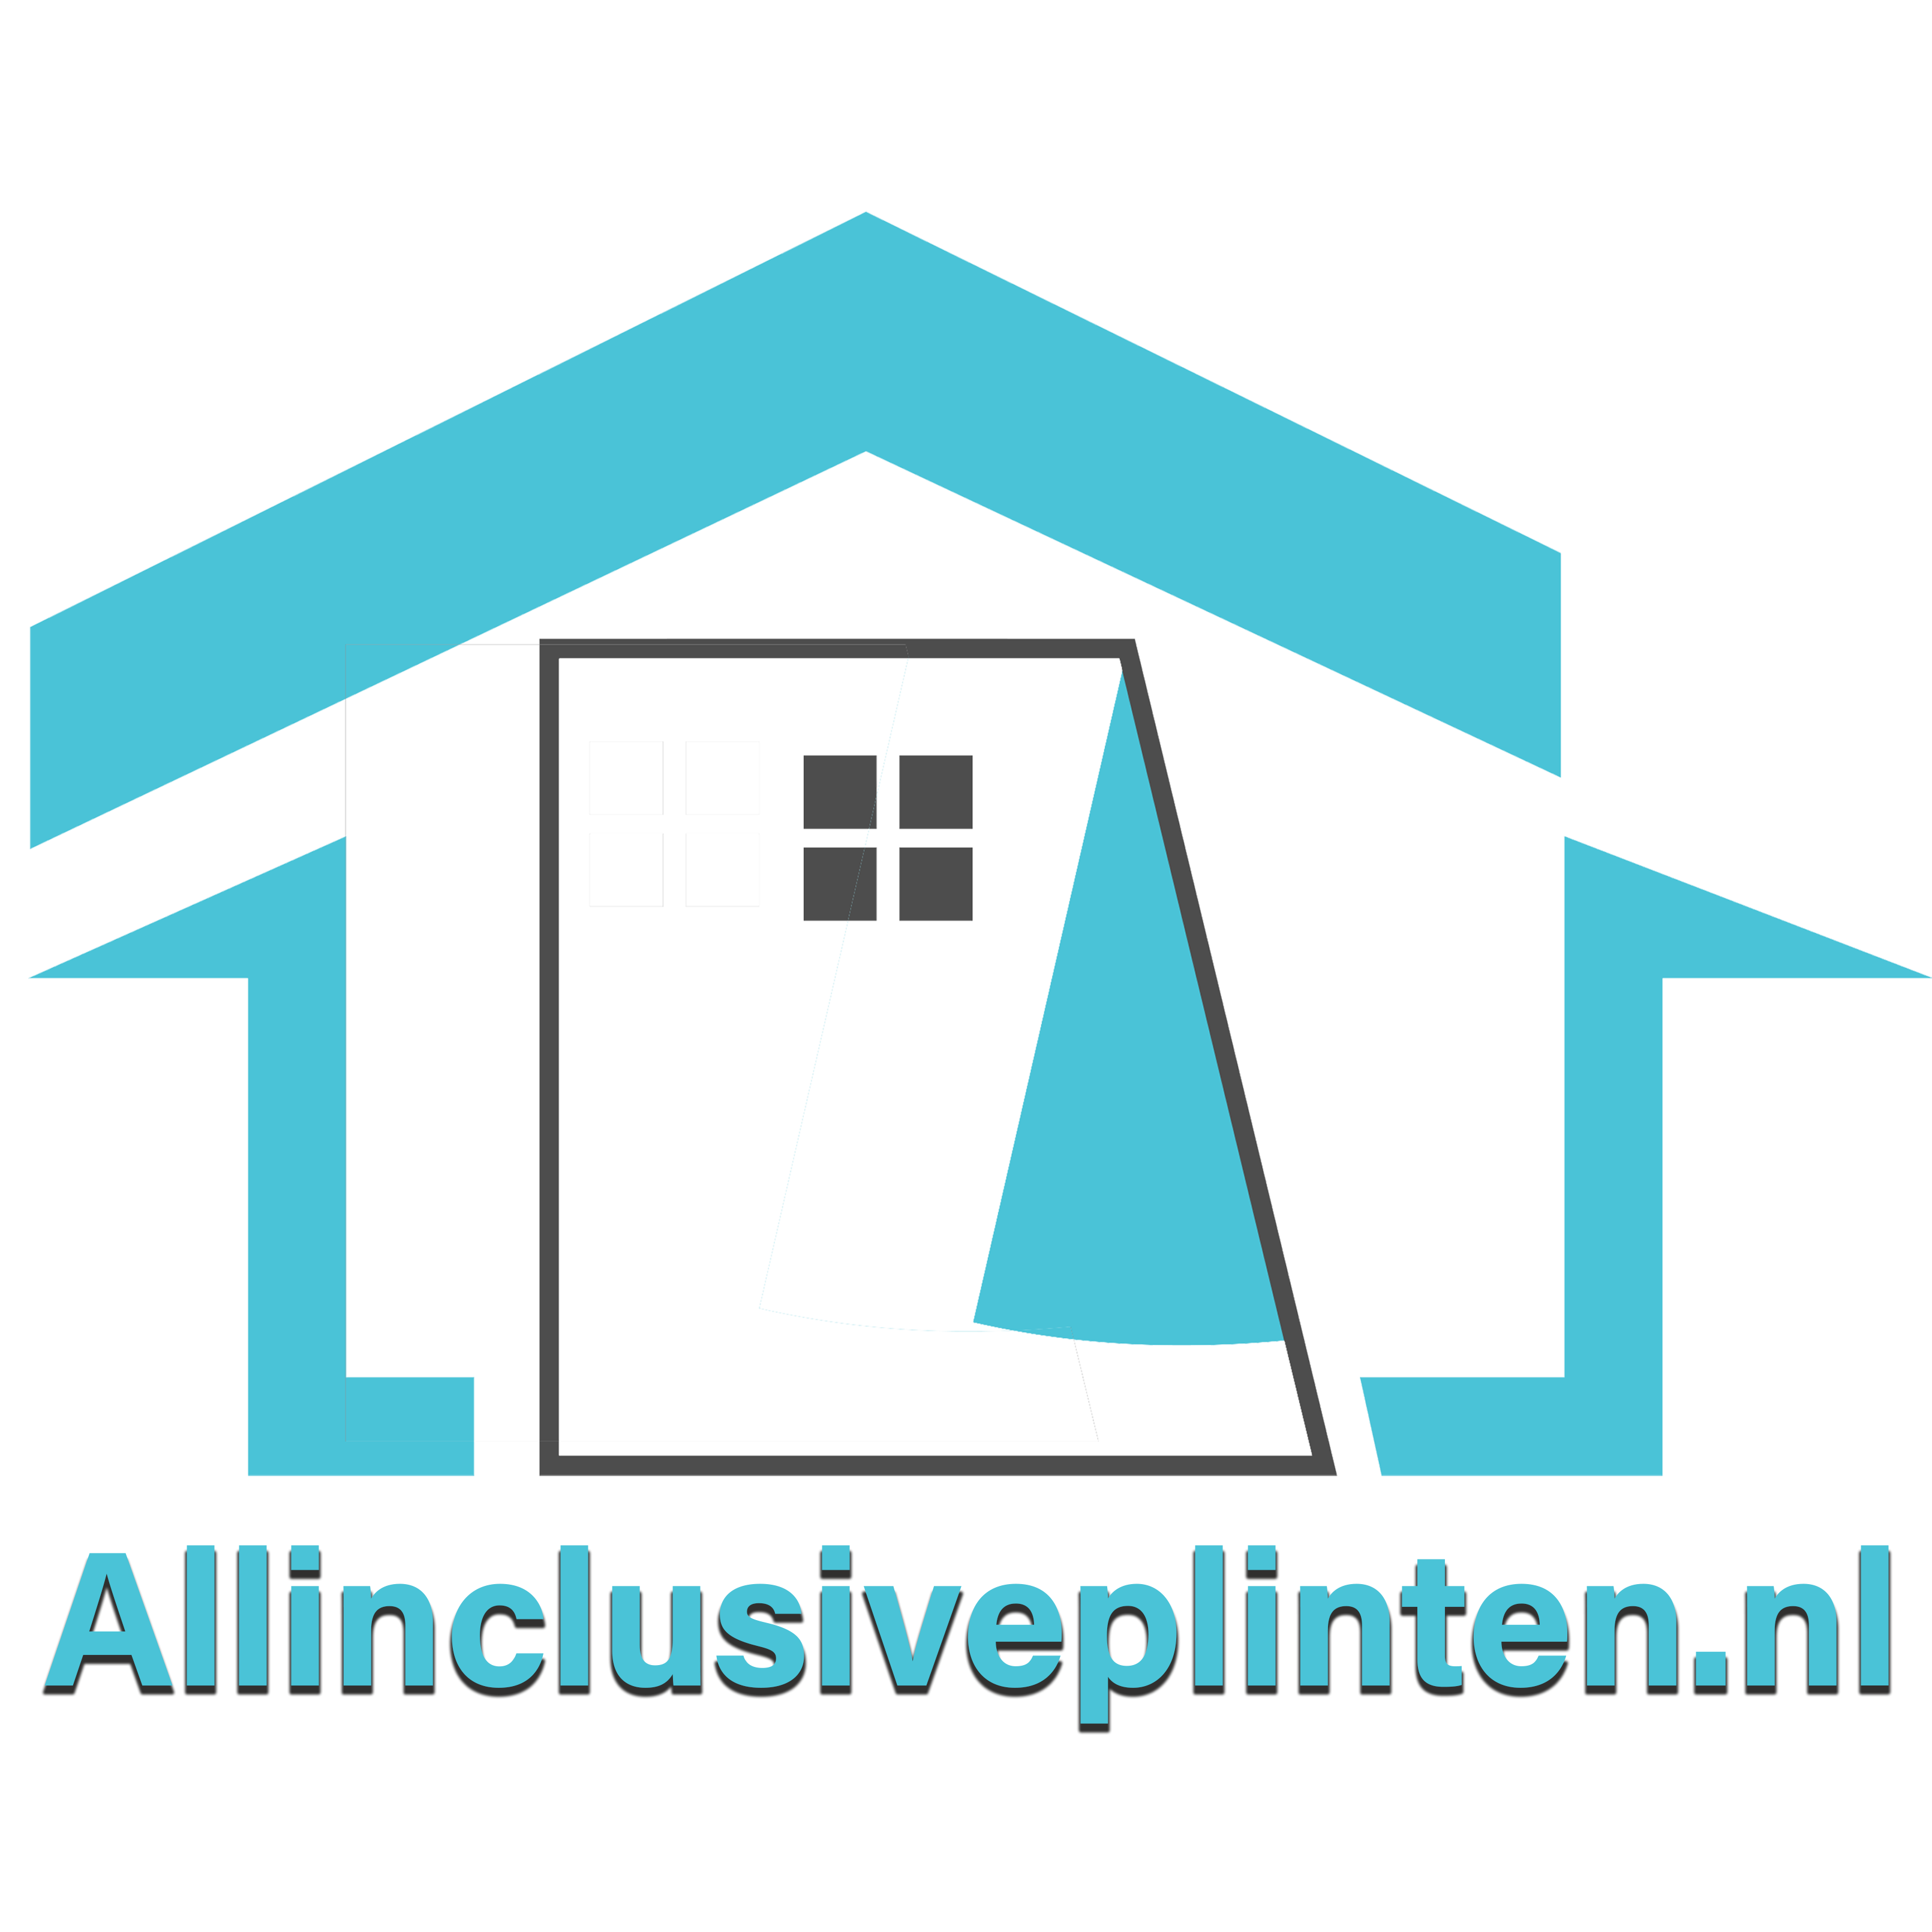 allinclusiveplinten.nl